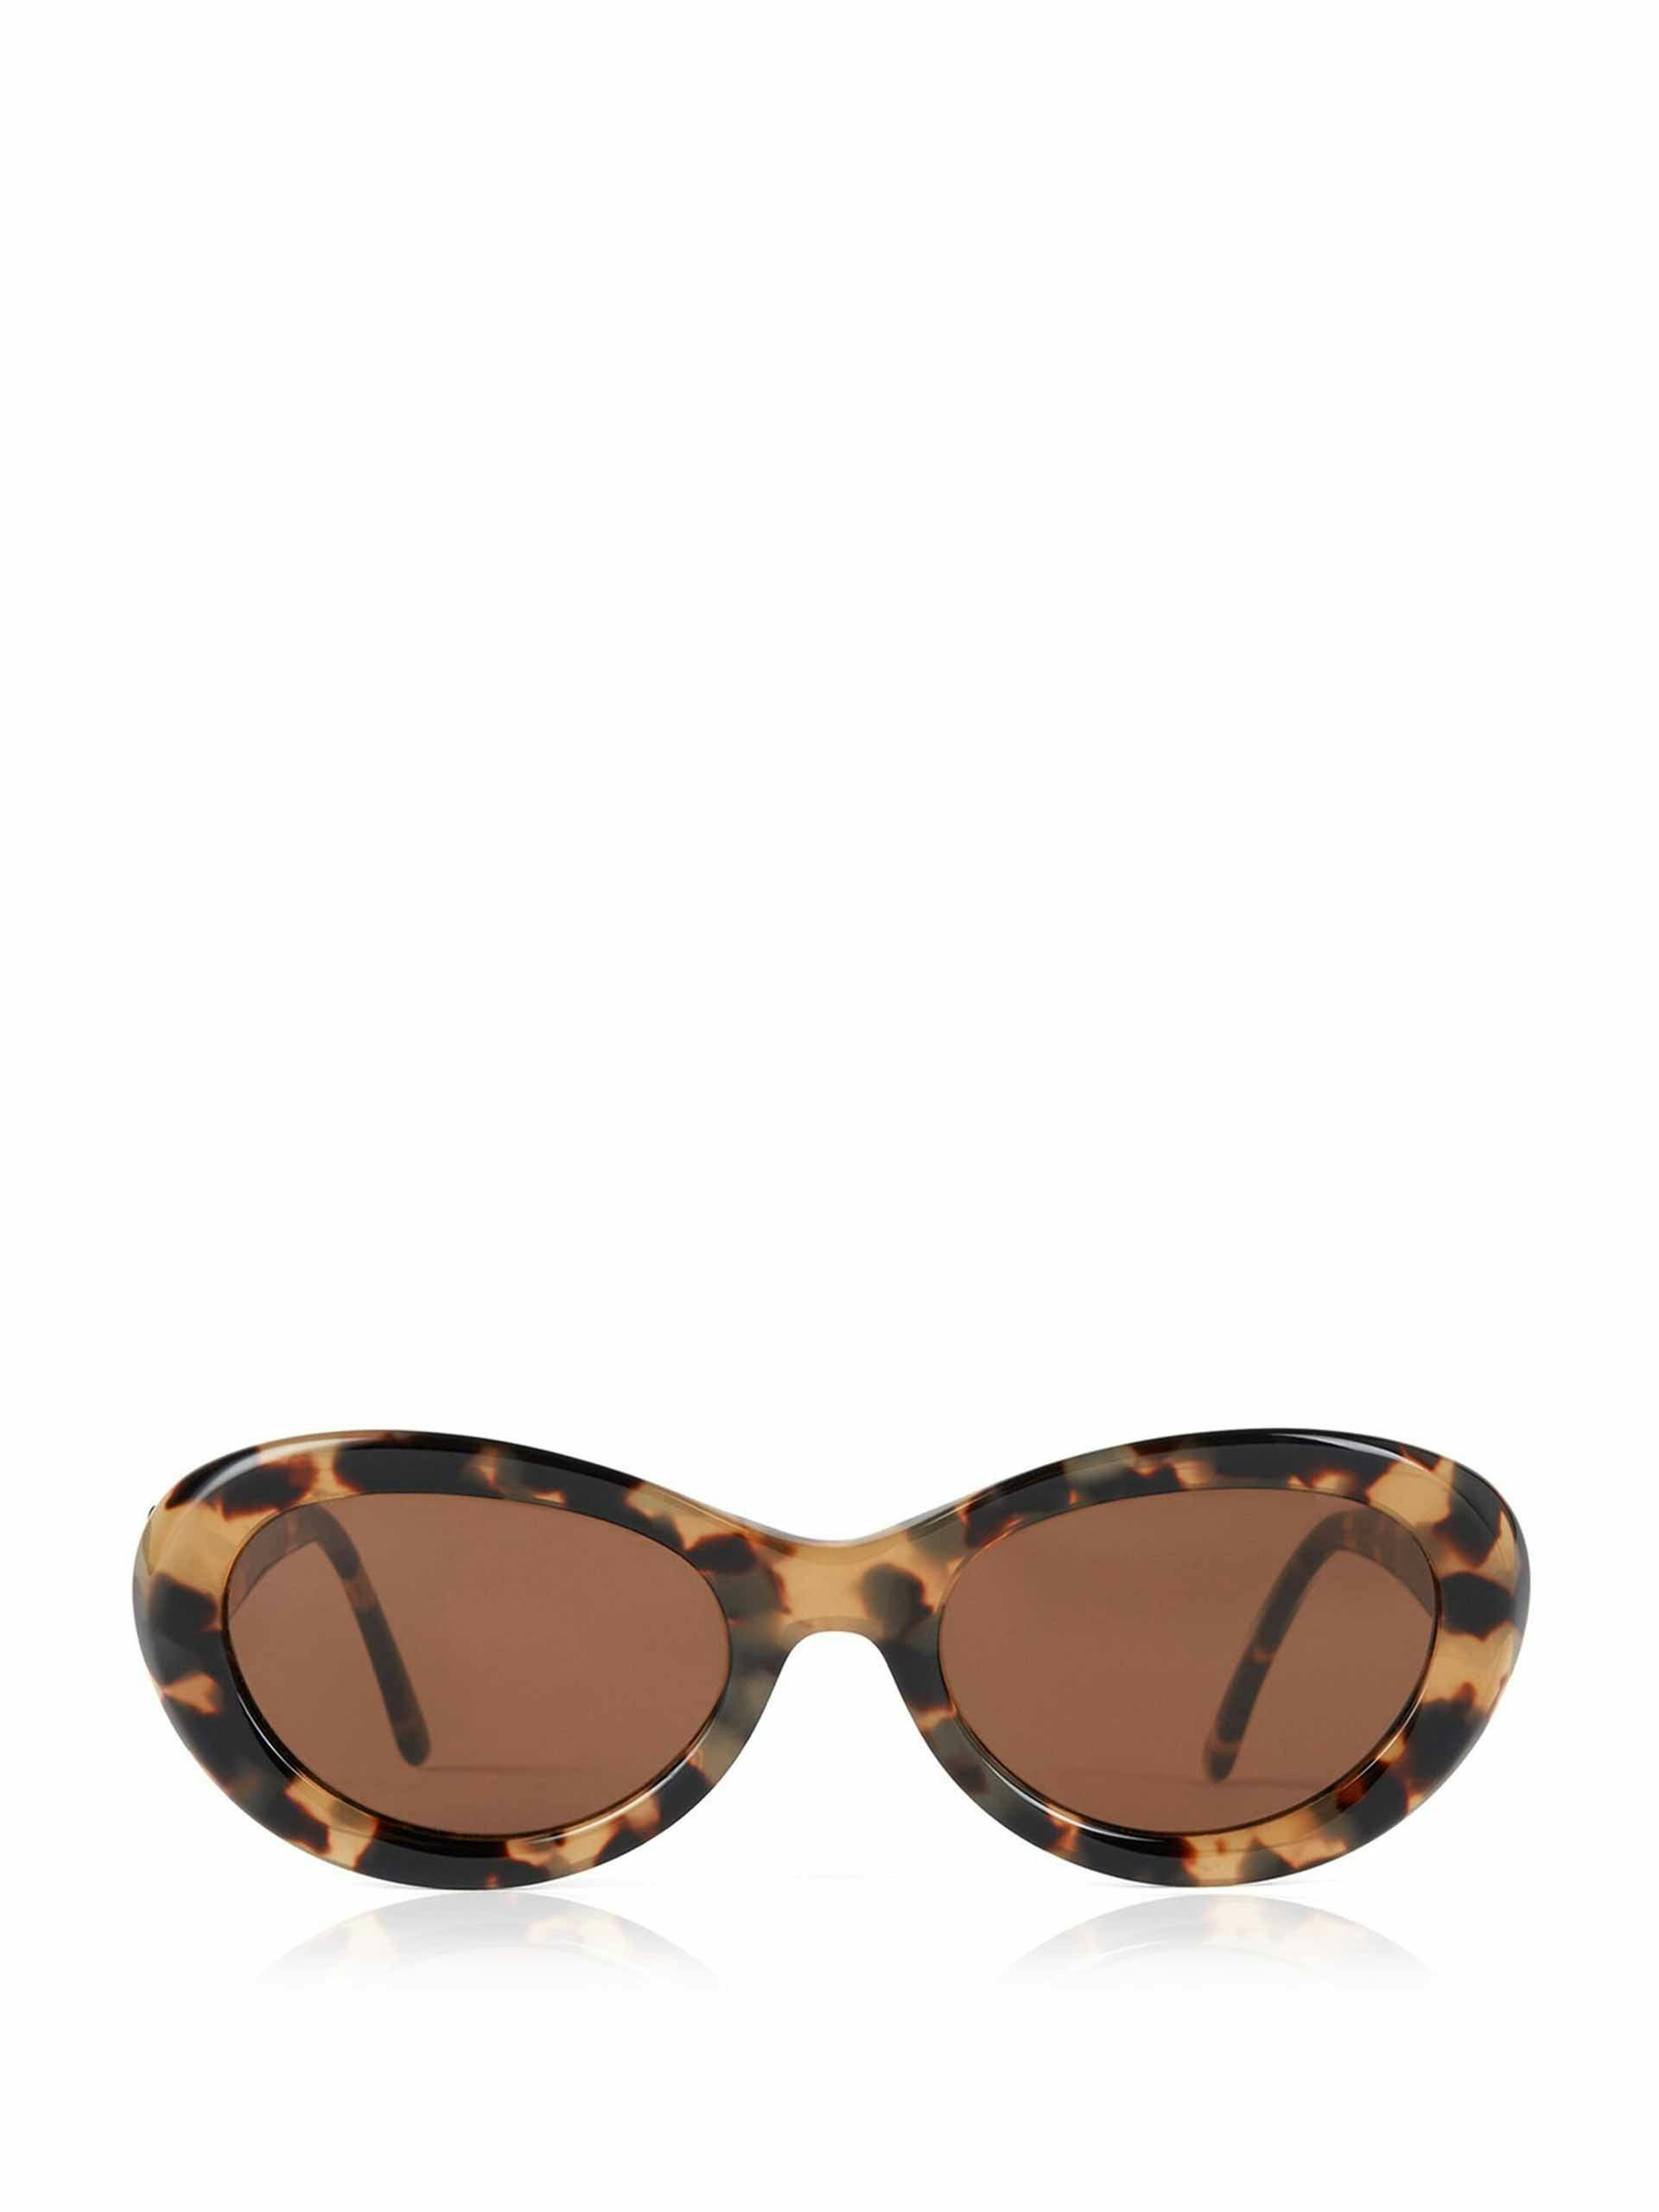 The Ovals round frame acetate sunglasses